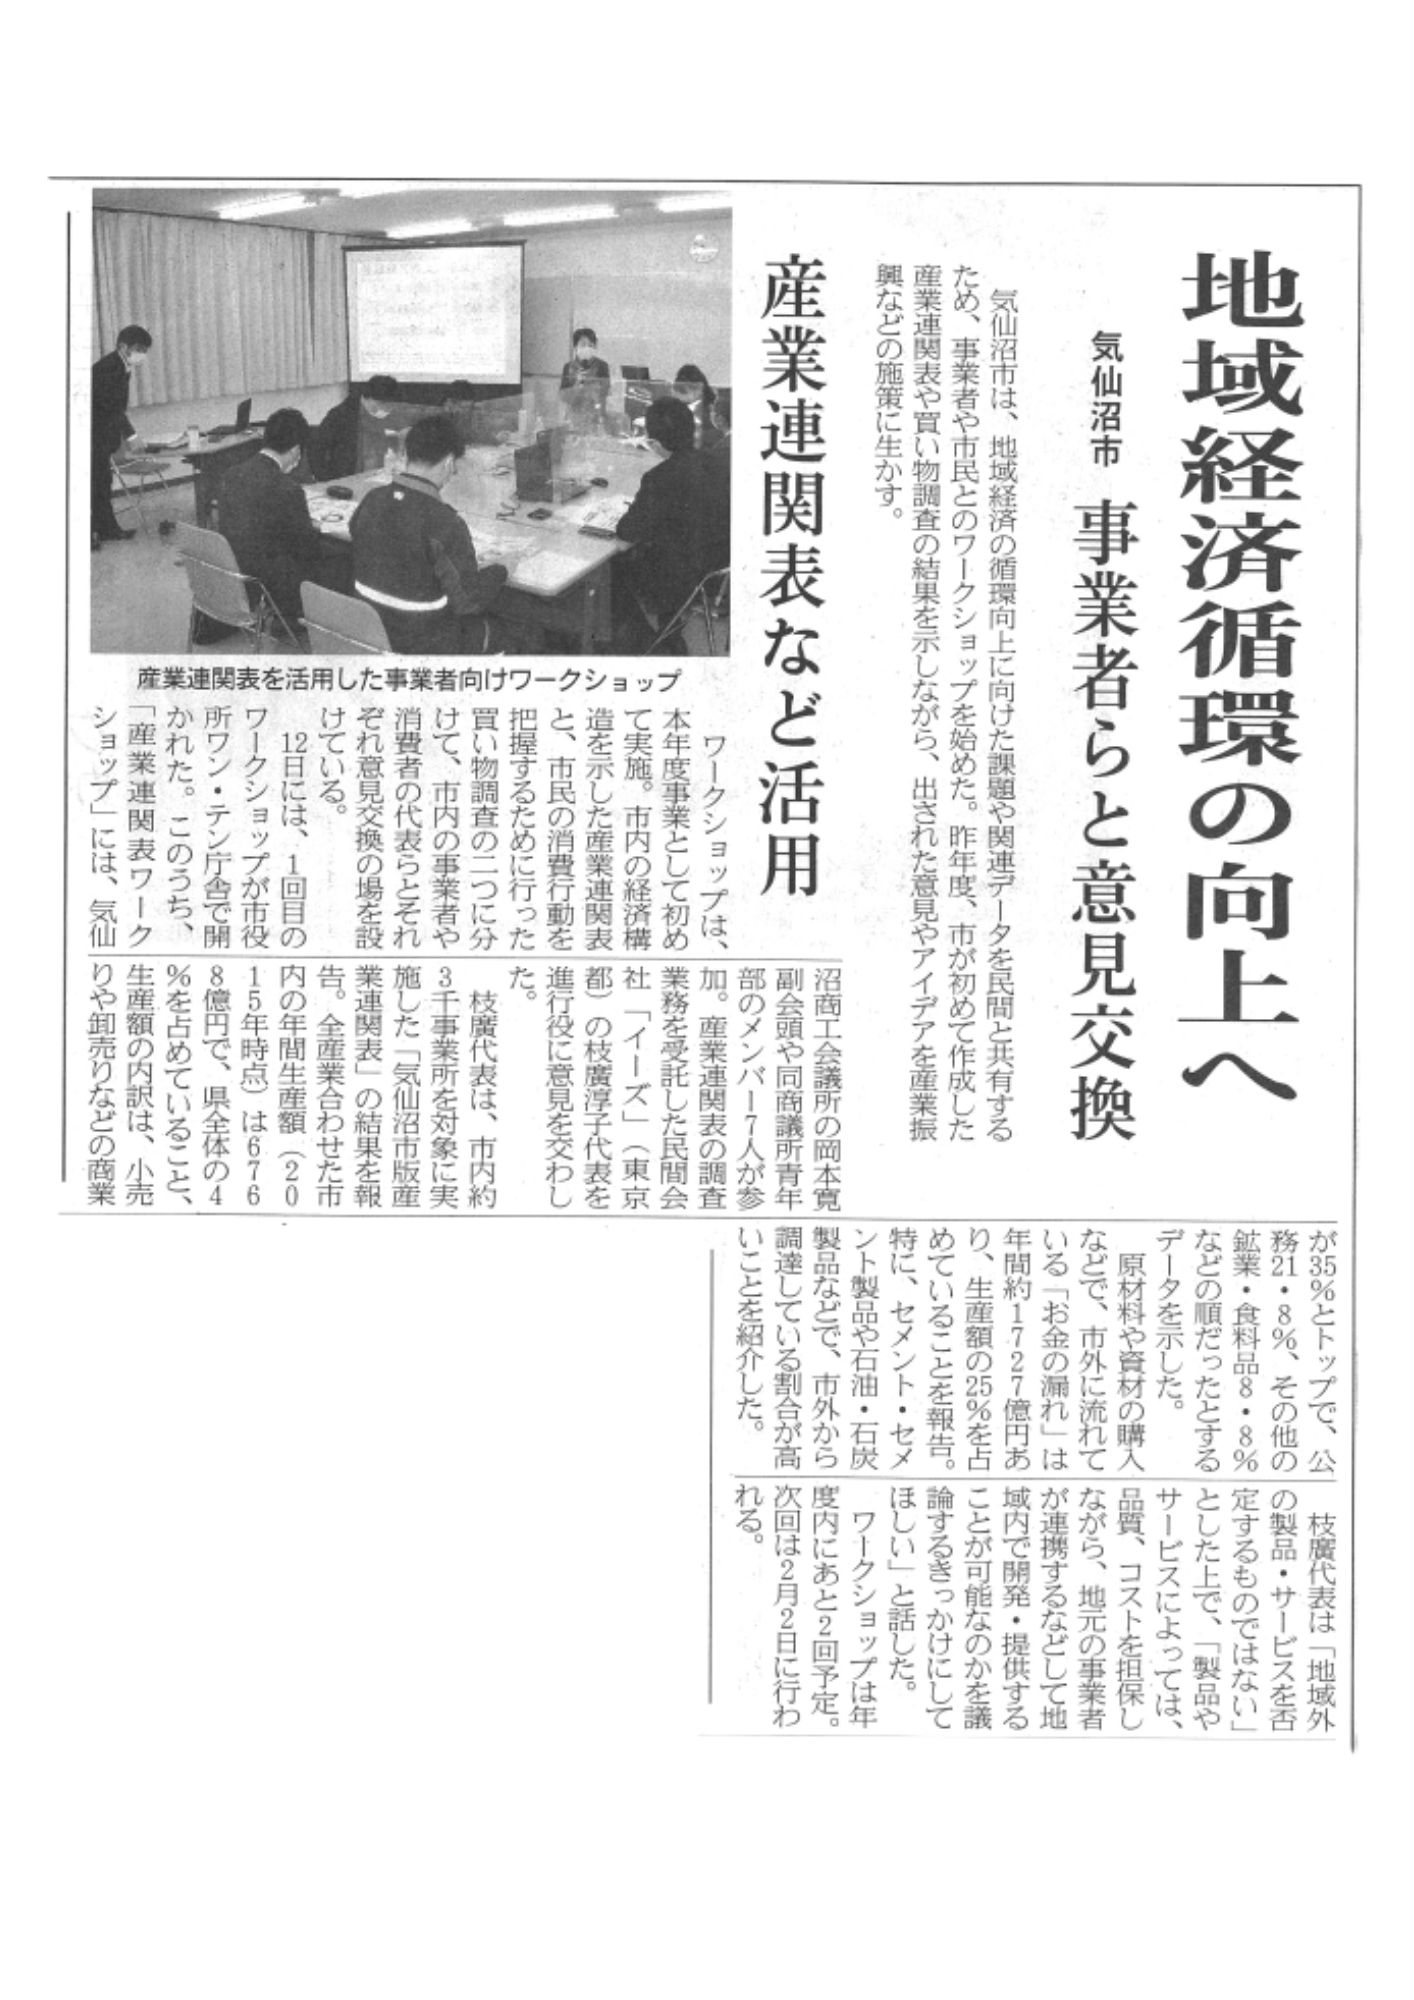 https://www.es-inc.jp/news/archives/img/1.jpg